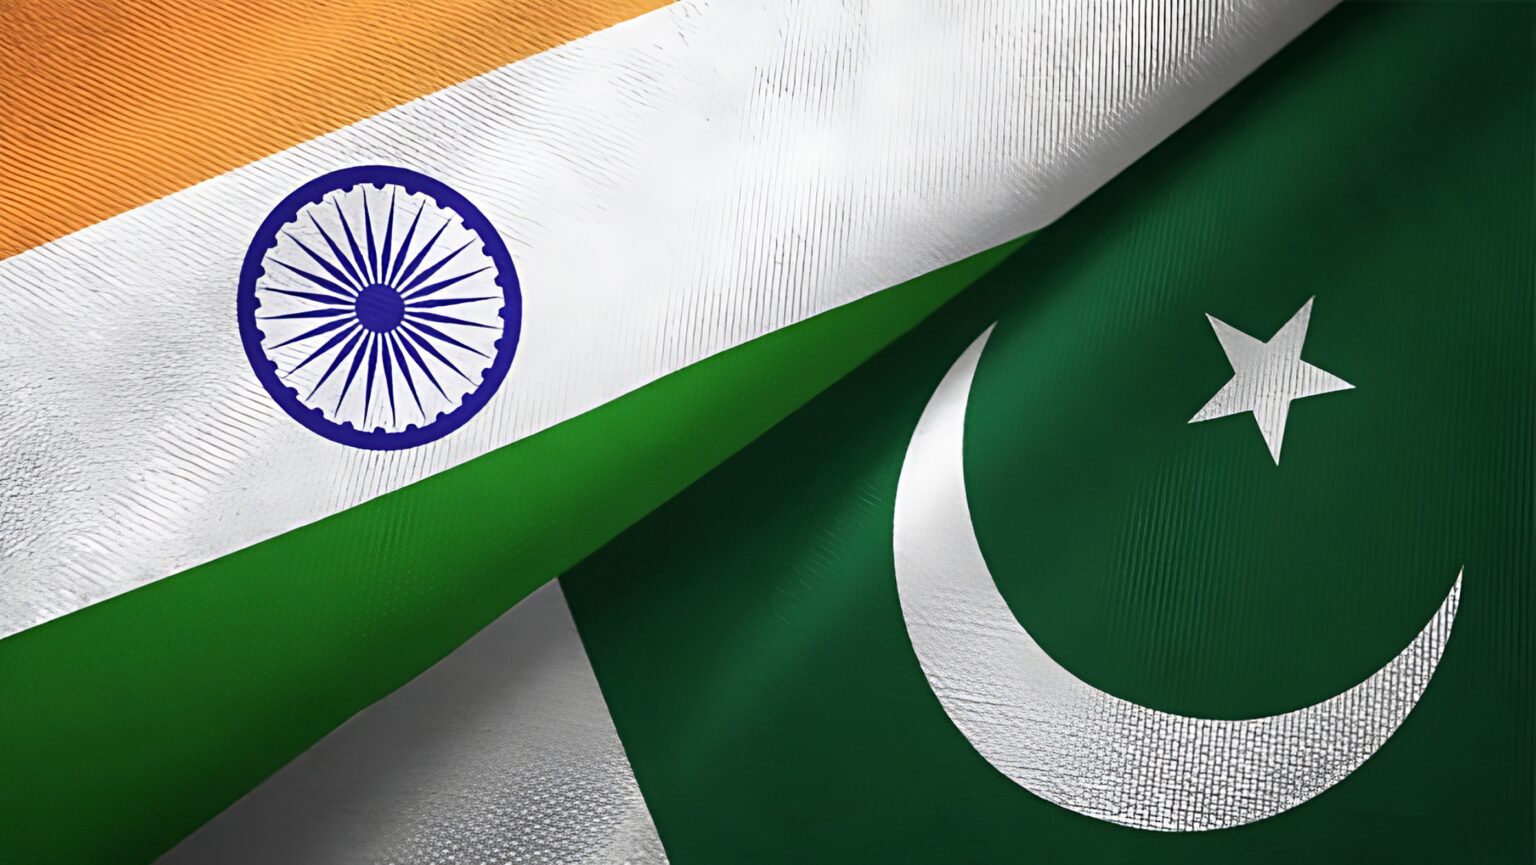 Terrorism tension between India and Pakistan